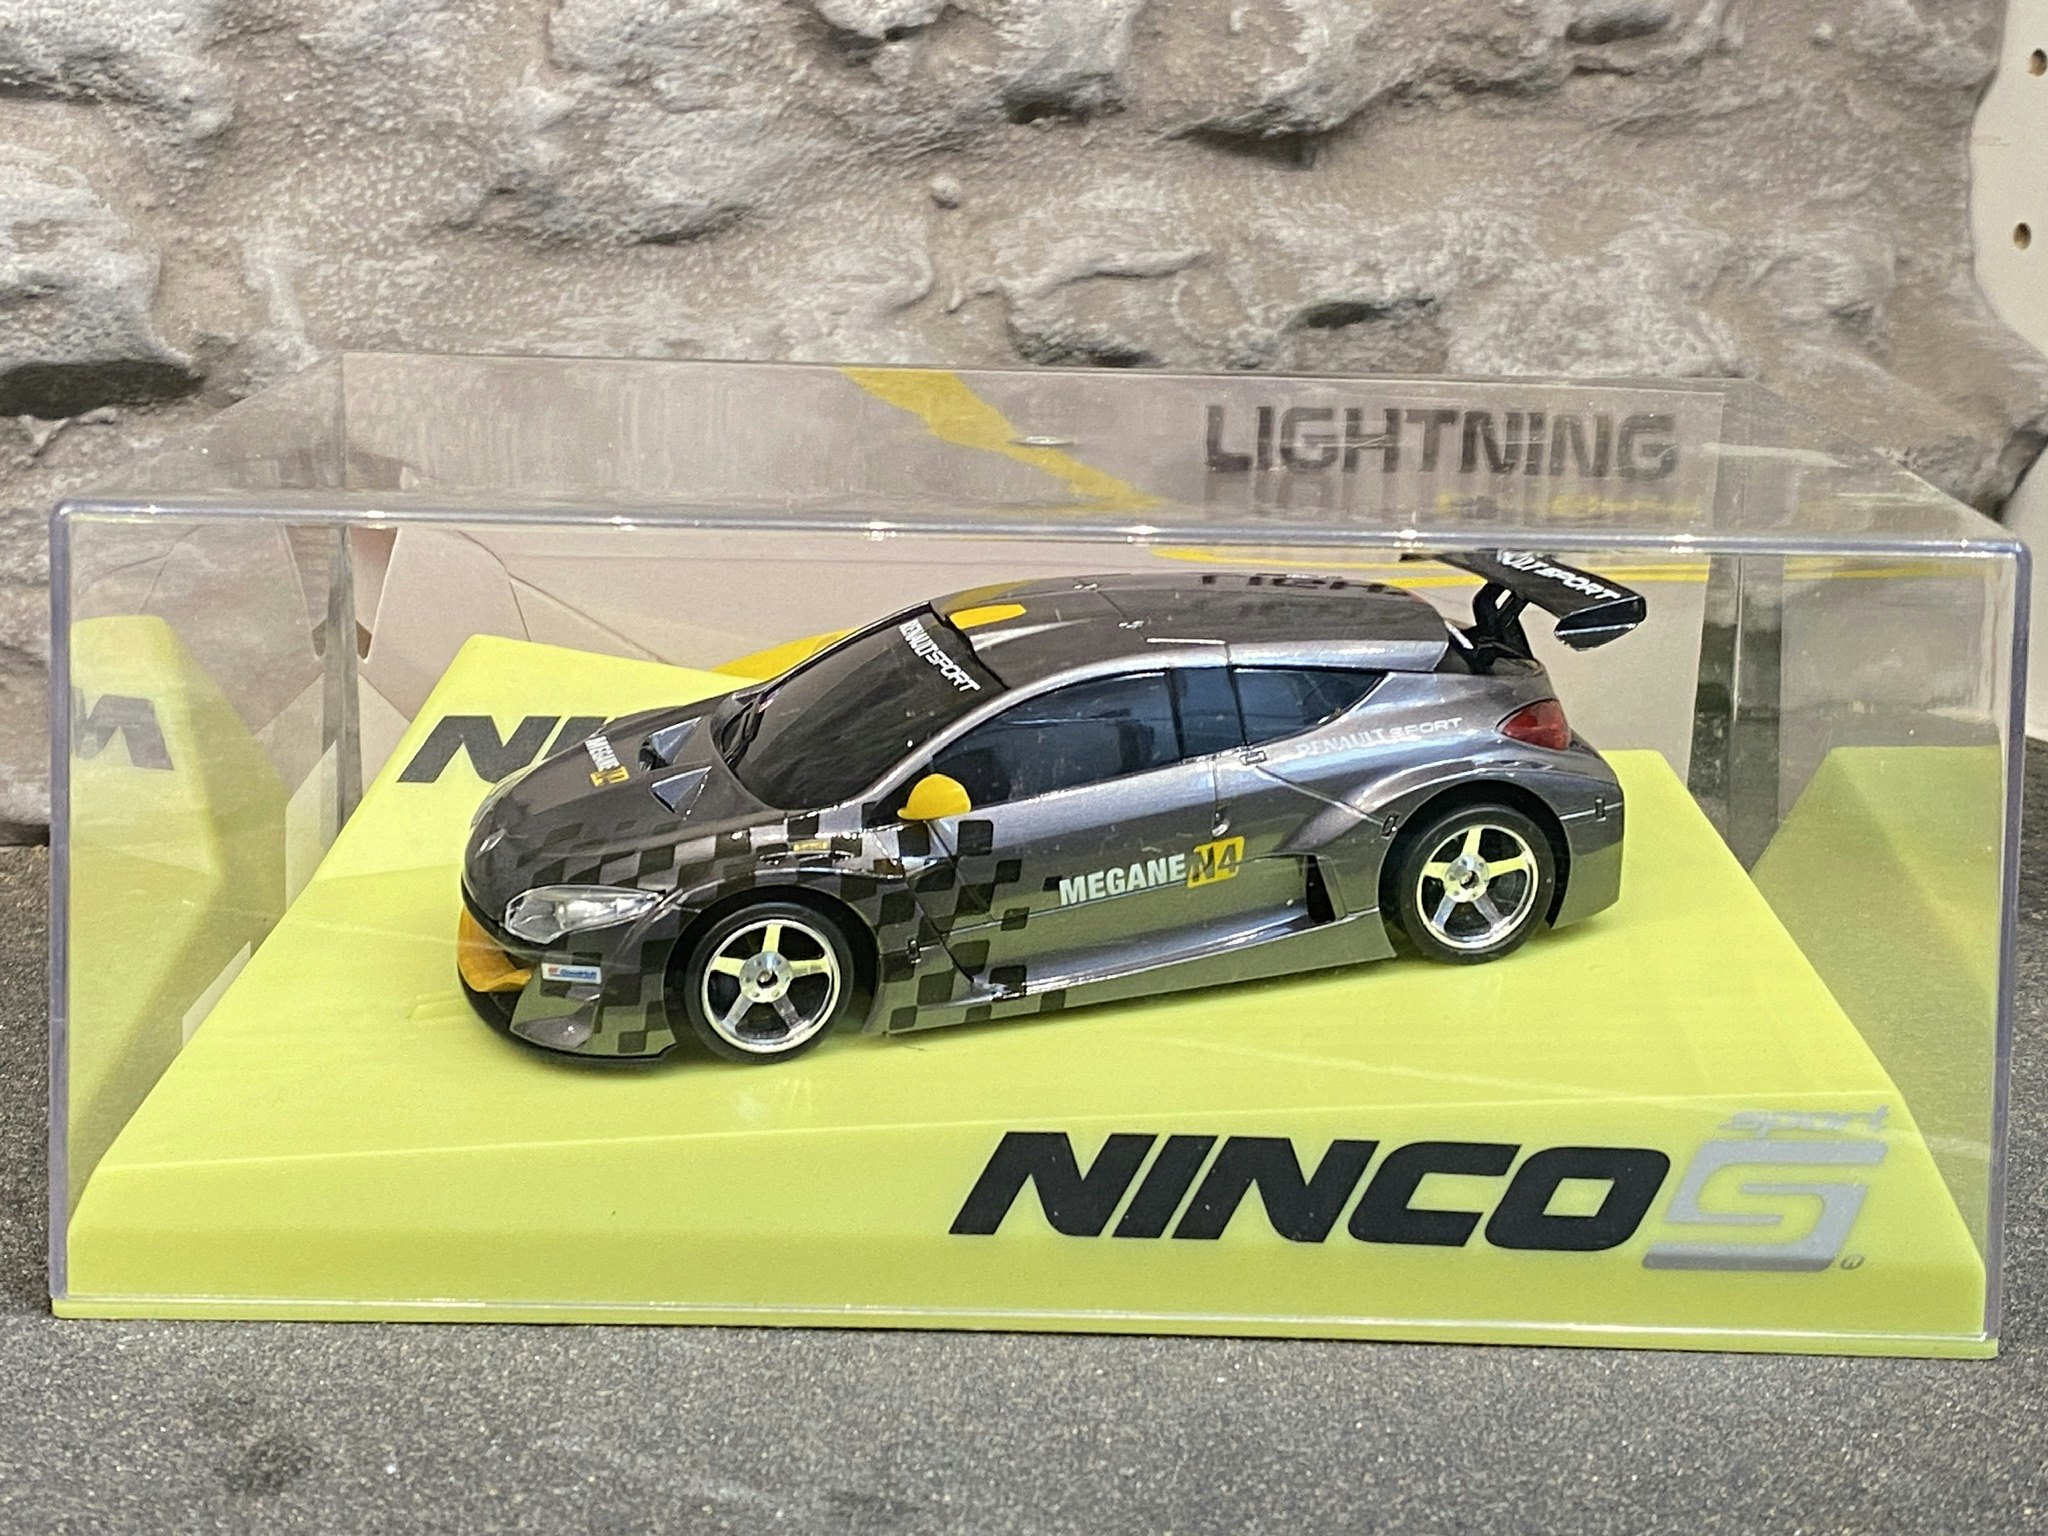 Skala 1/32 Analog Bil till Bilbana: Renault Megane Thropy 09 N4 Lightning fr NINCO